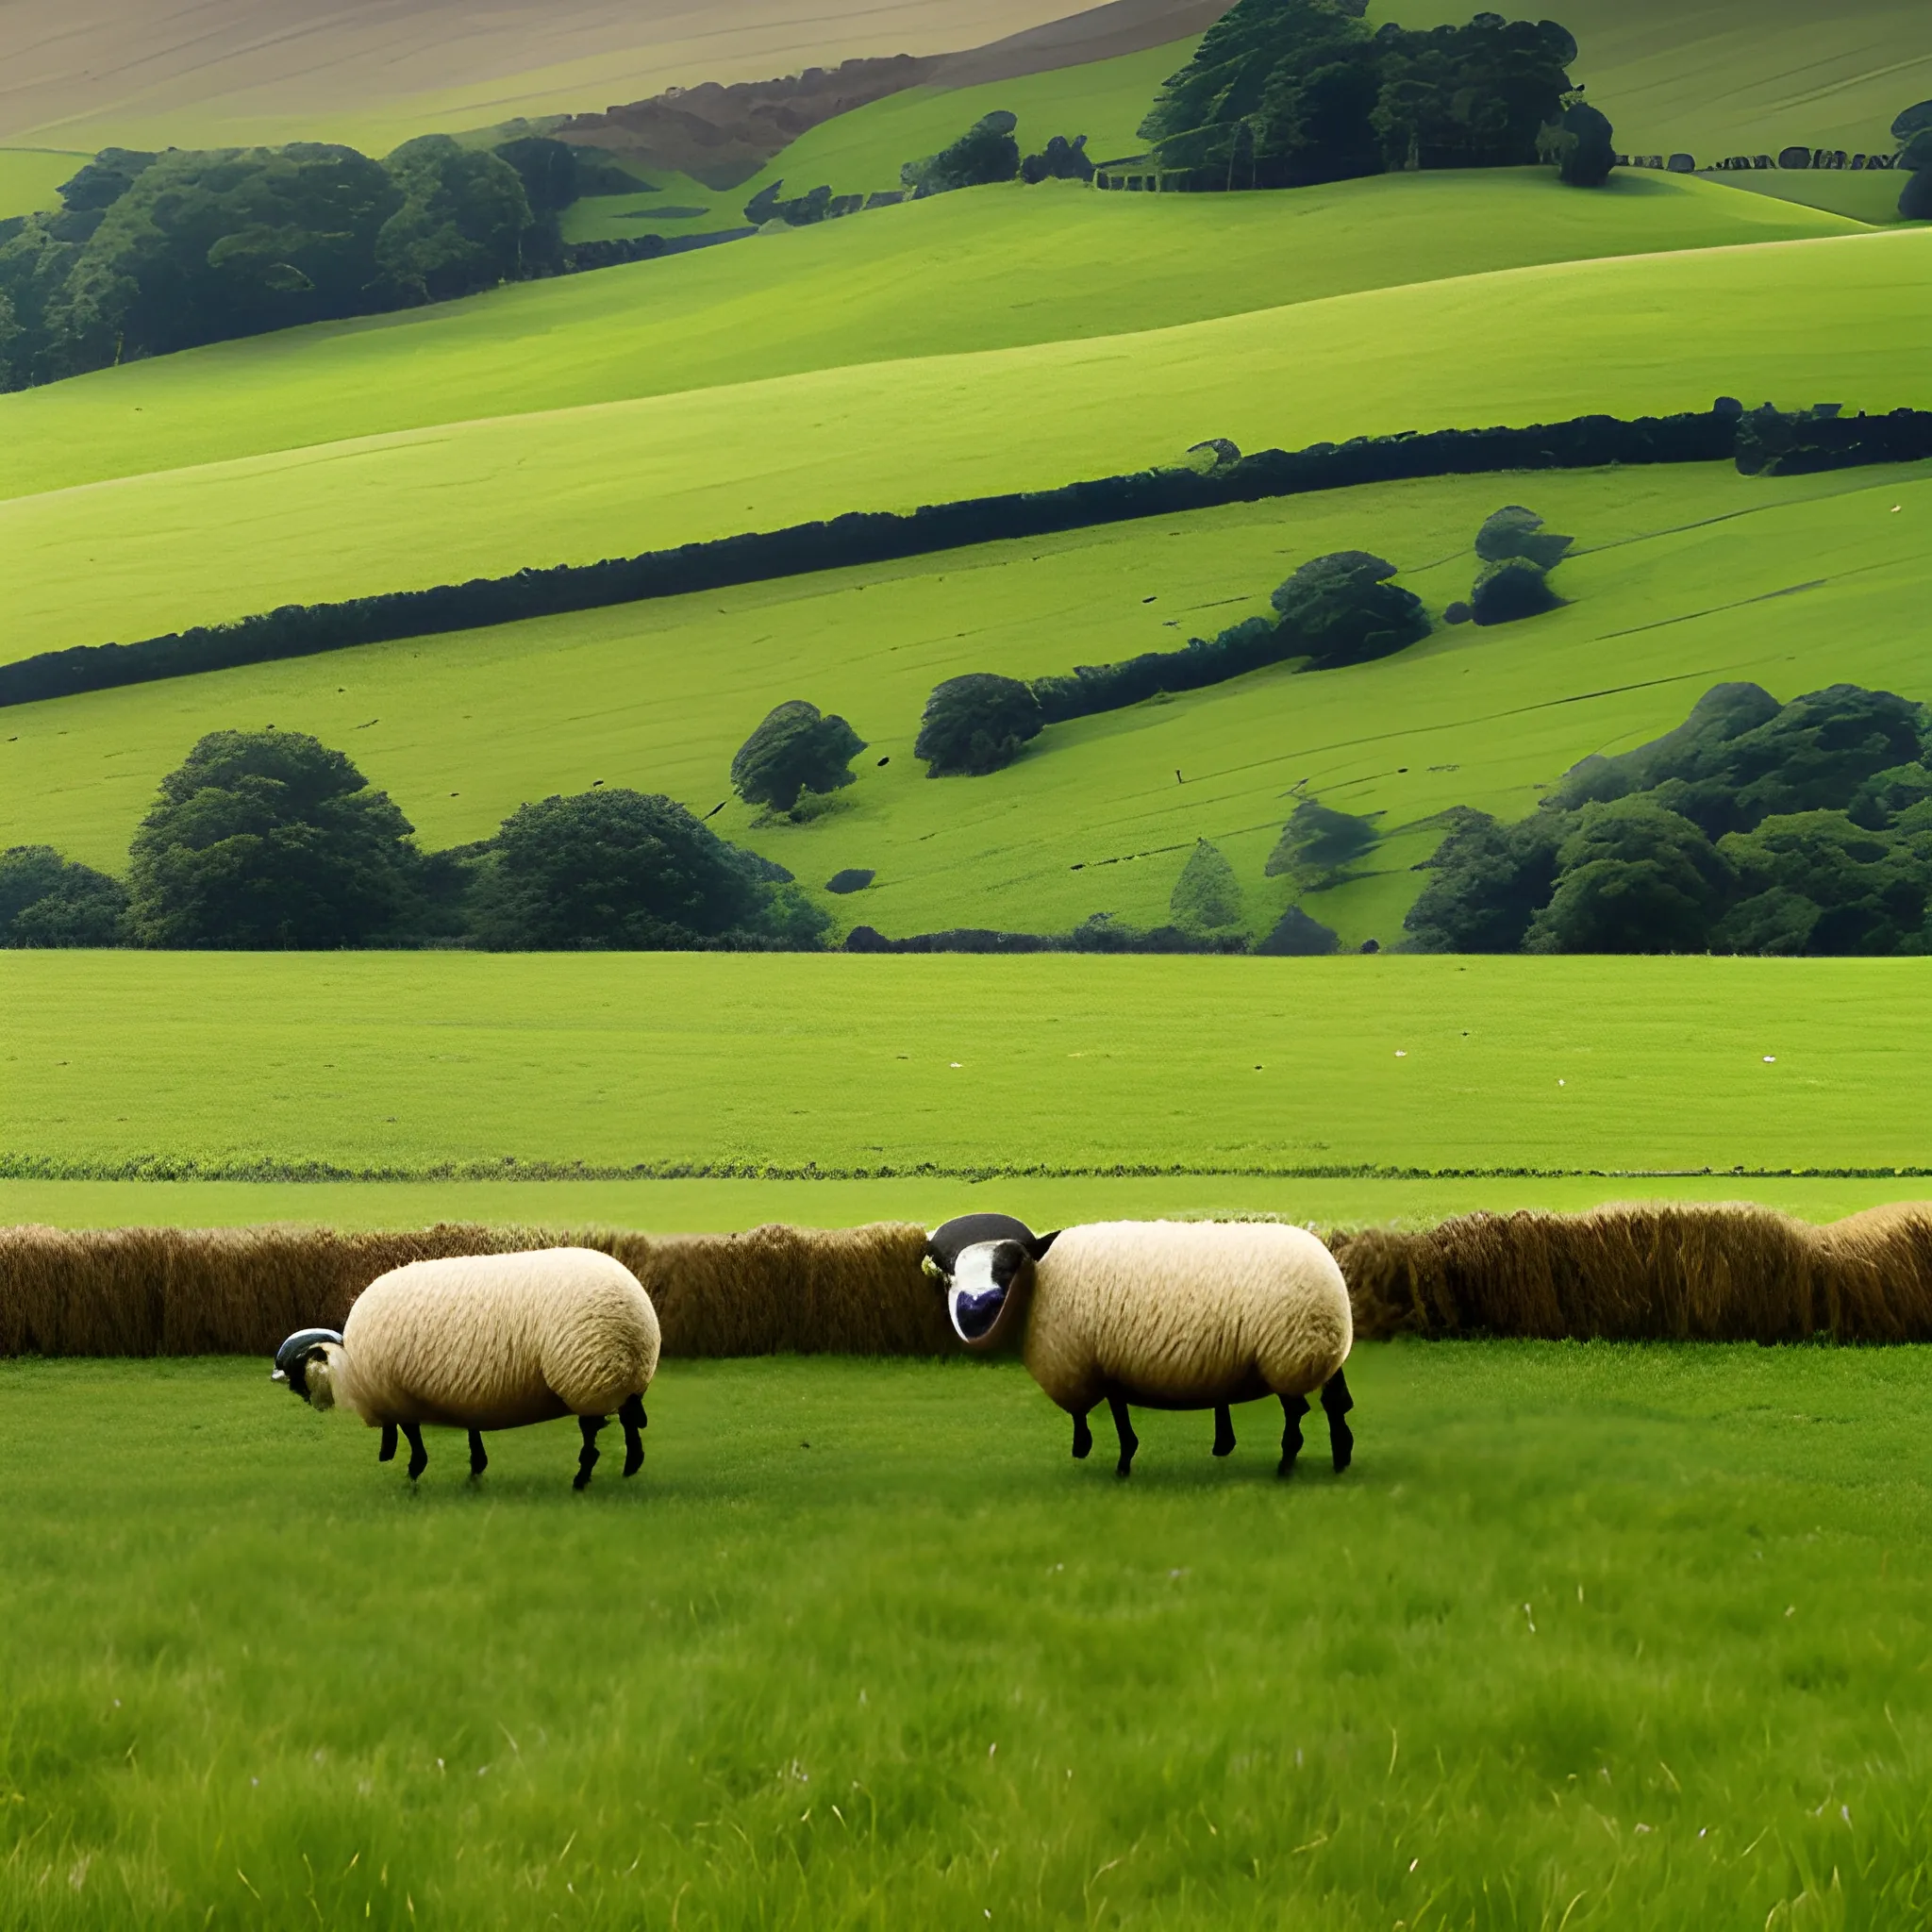 sheep jumping through the fields - Arthub.ai